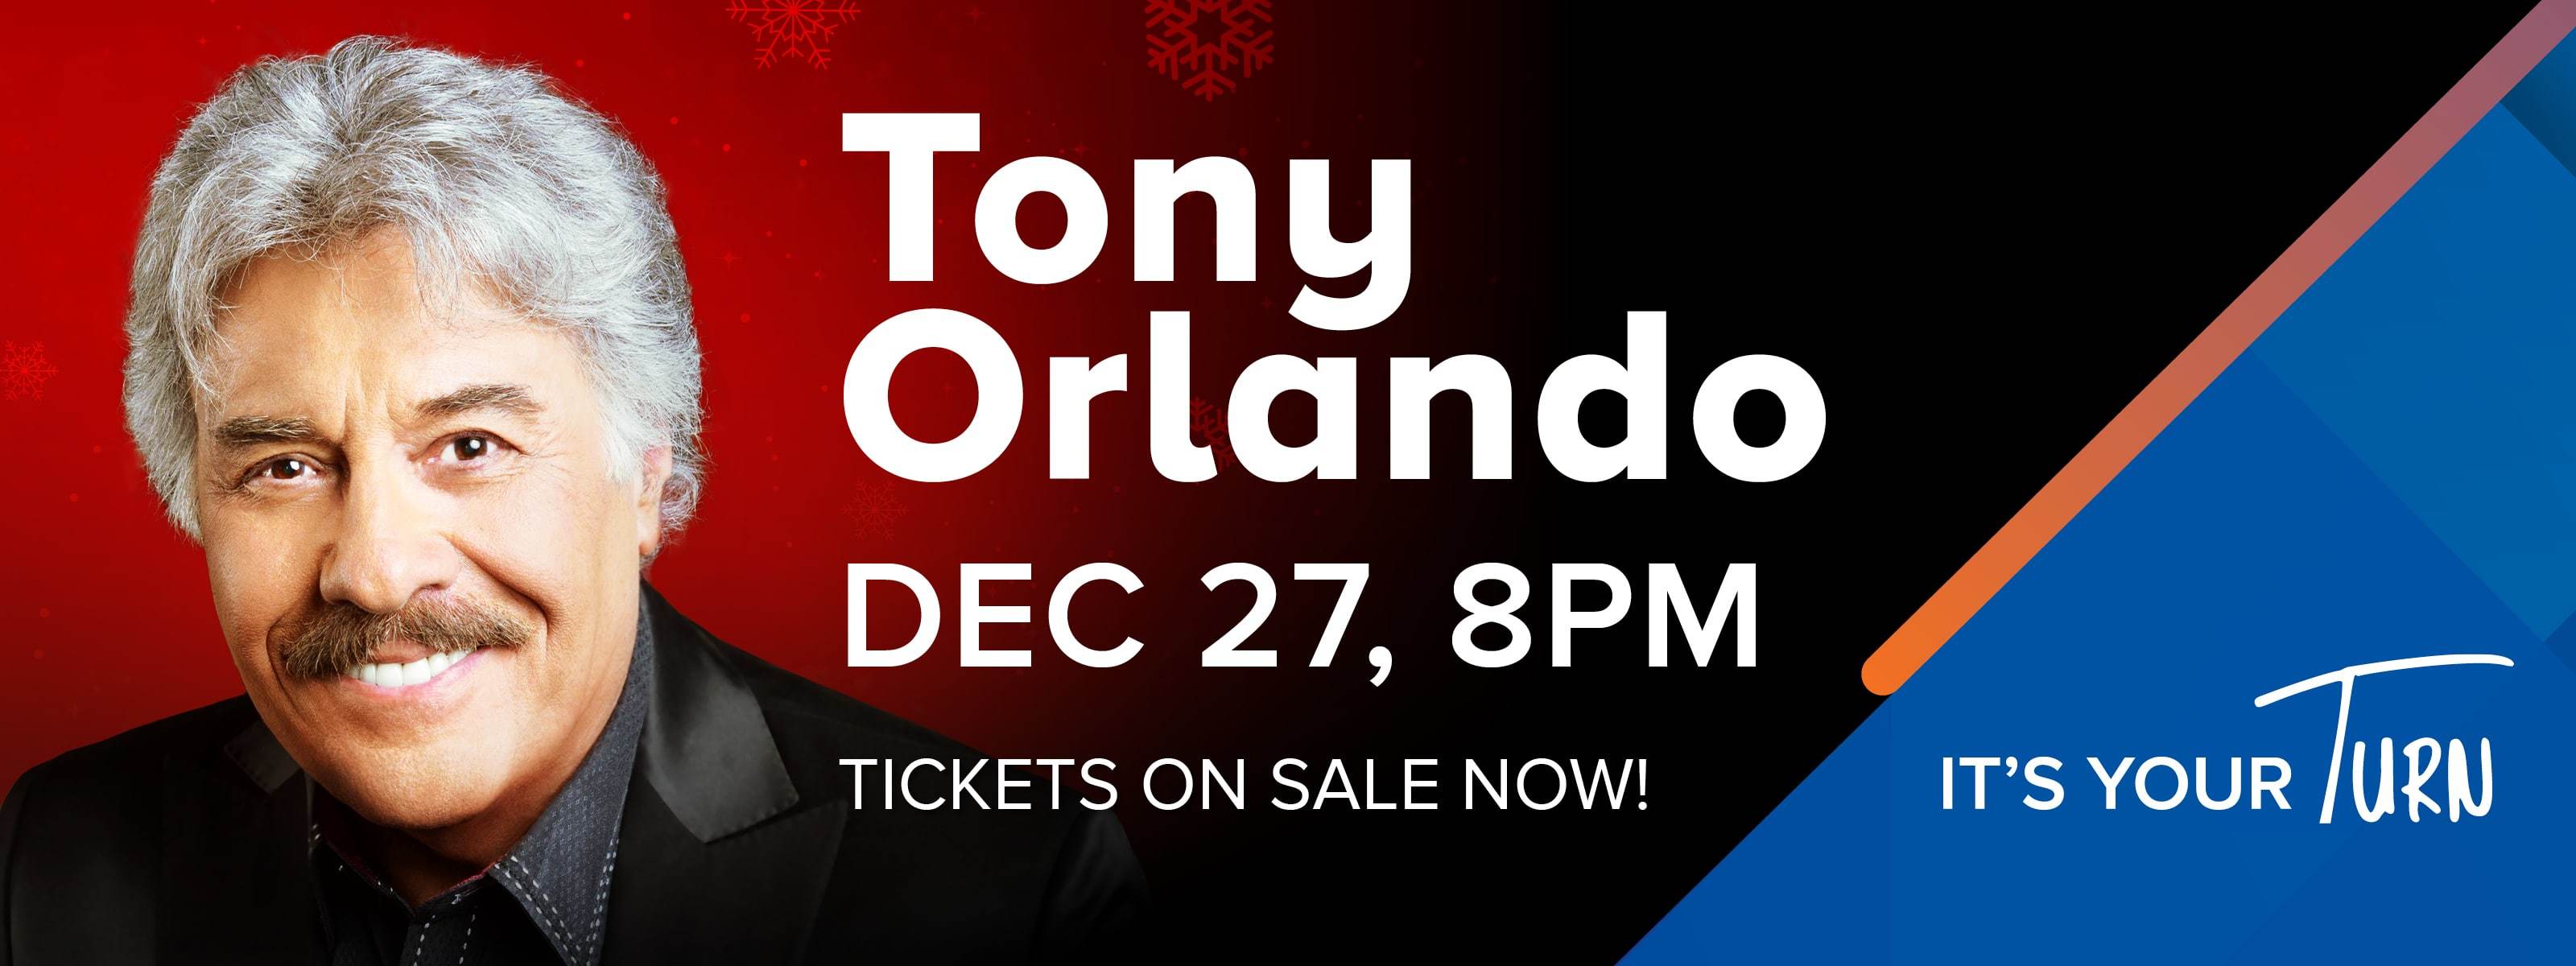 Tony Orlando Dec 27 8pm Tickets On Sale Now